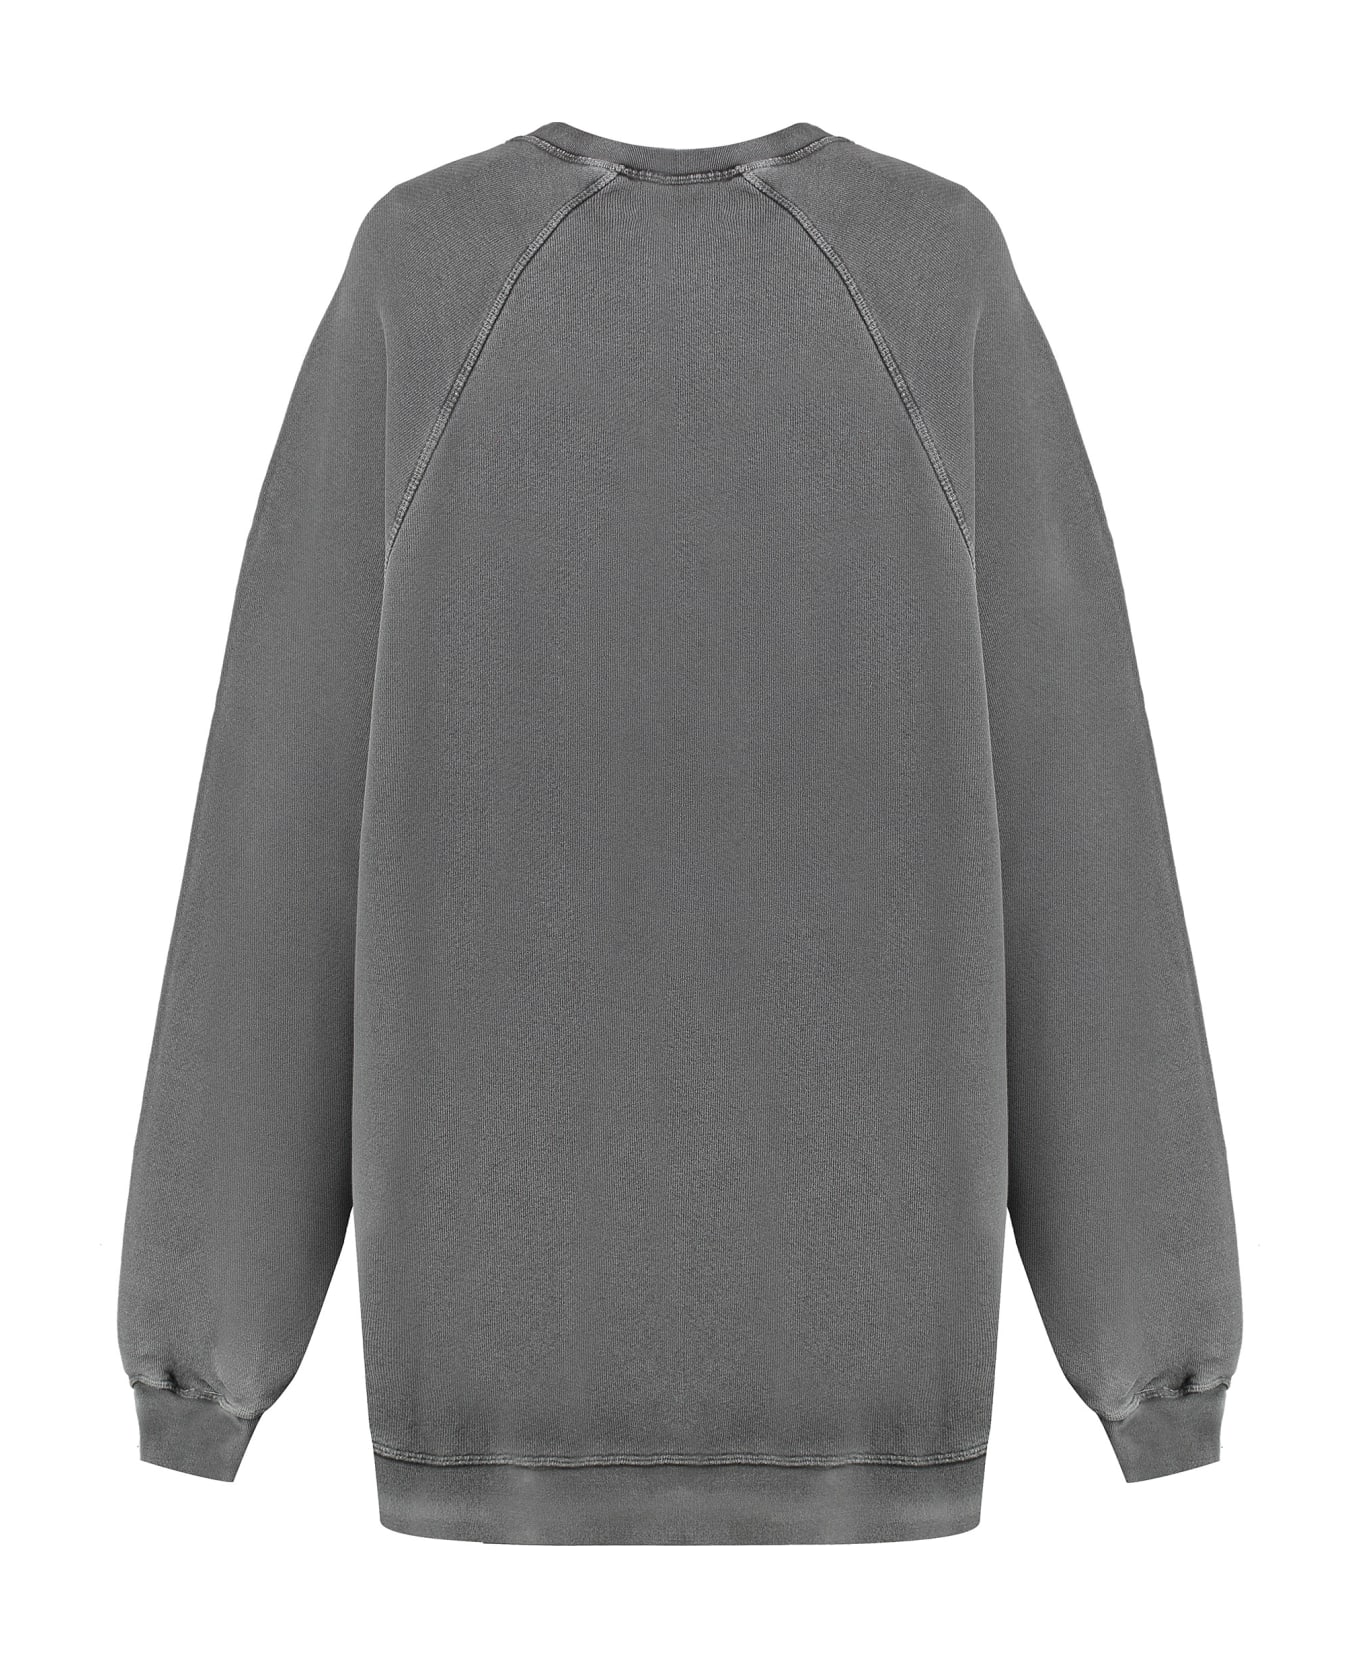 HALFBOY Cotton Crew-neck Sweatshirt - grey